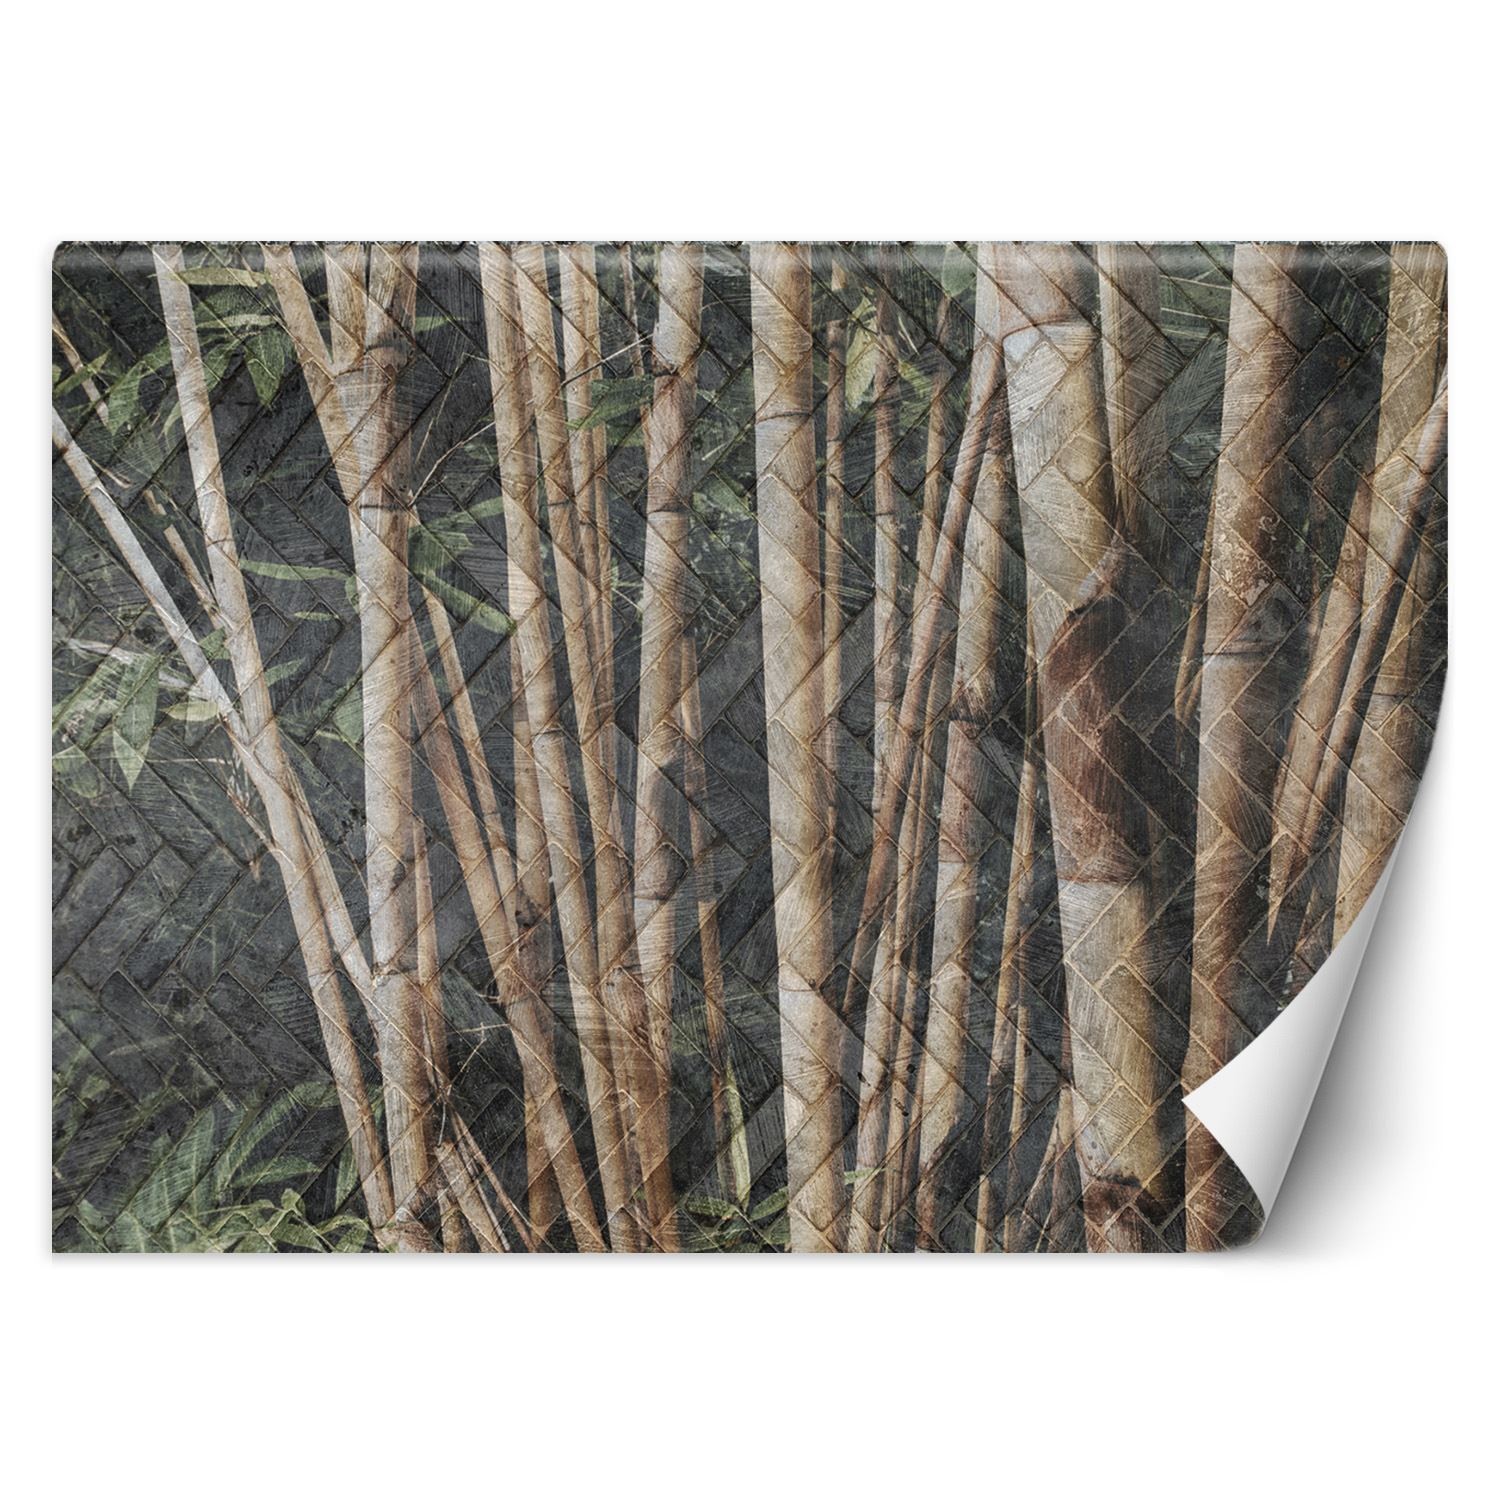 Trend24 – Behang – Bamboo Forest – Vliesbehang – Behang Woonkamer – Fotobehang – 254×184 cm – Incl. behanglijm